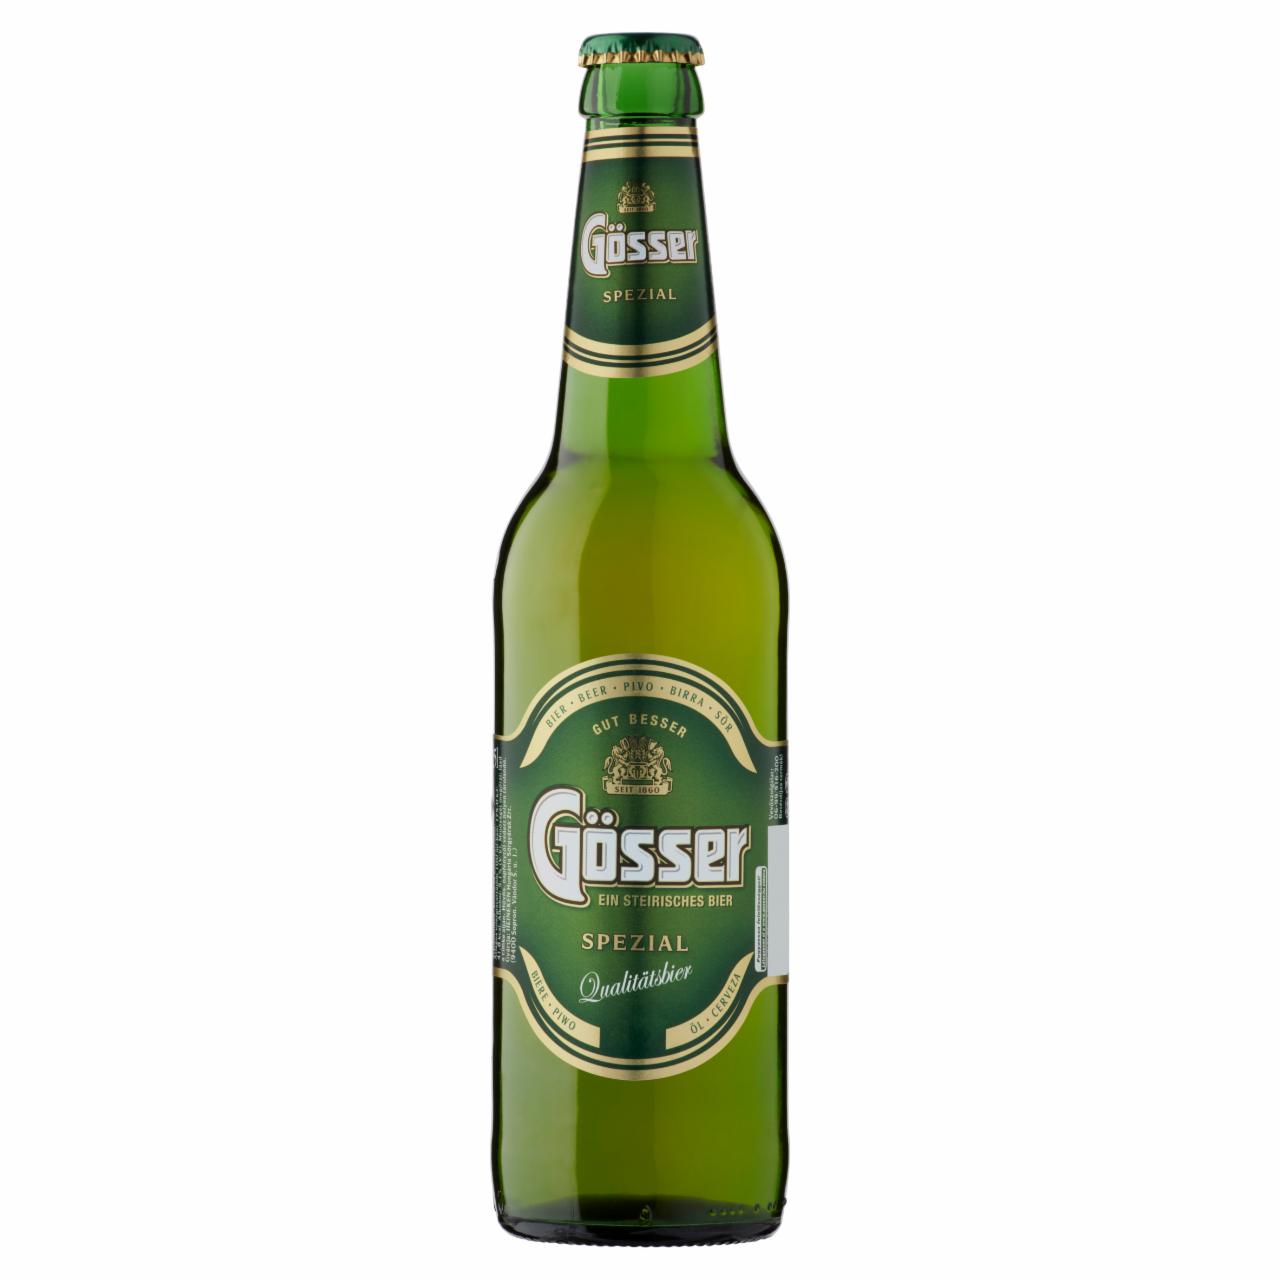 Képek - Gösser minőségi világos sör 5,1% 0,5 l üveg